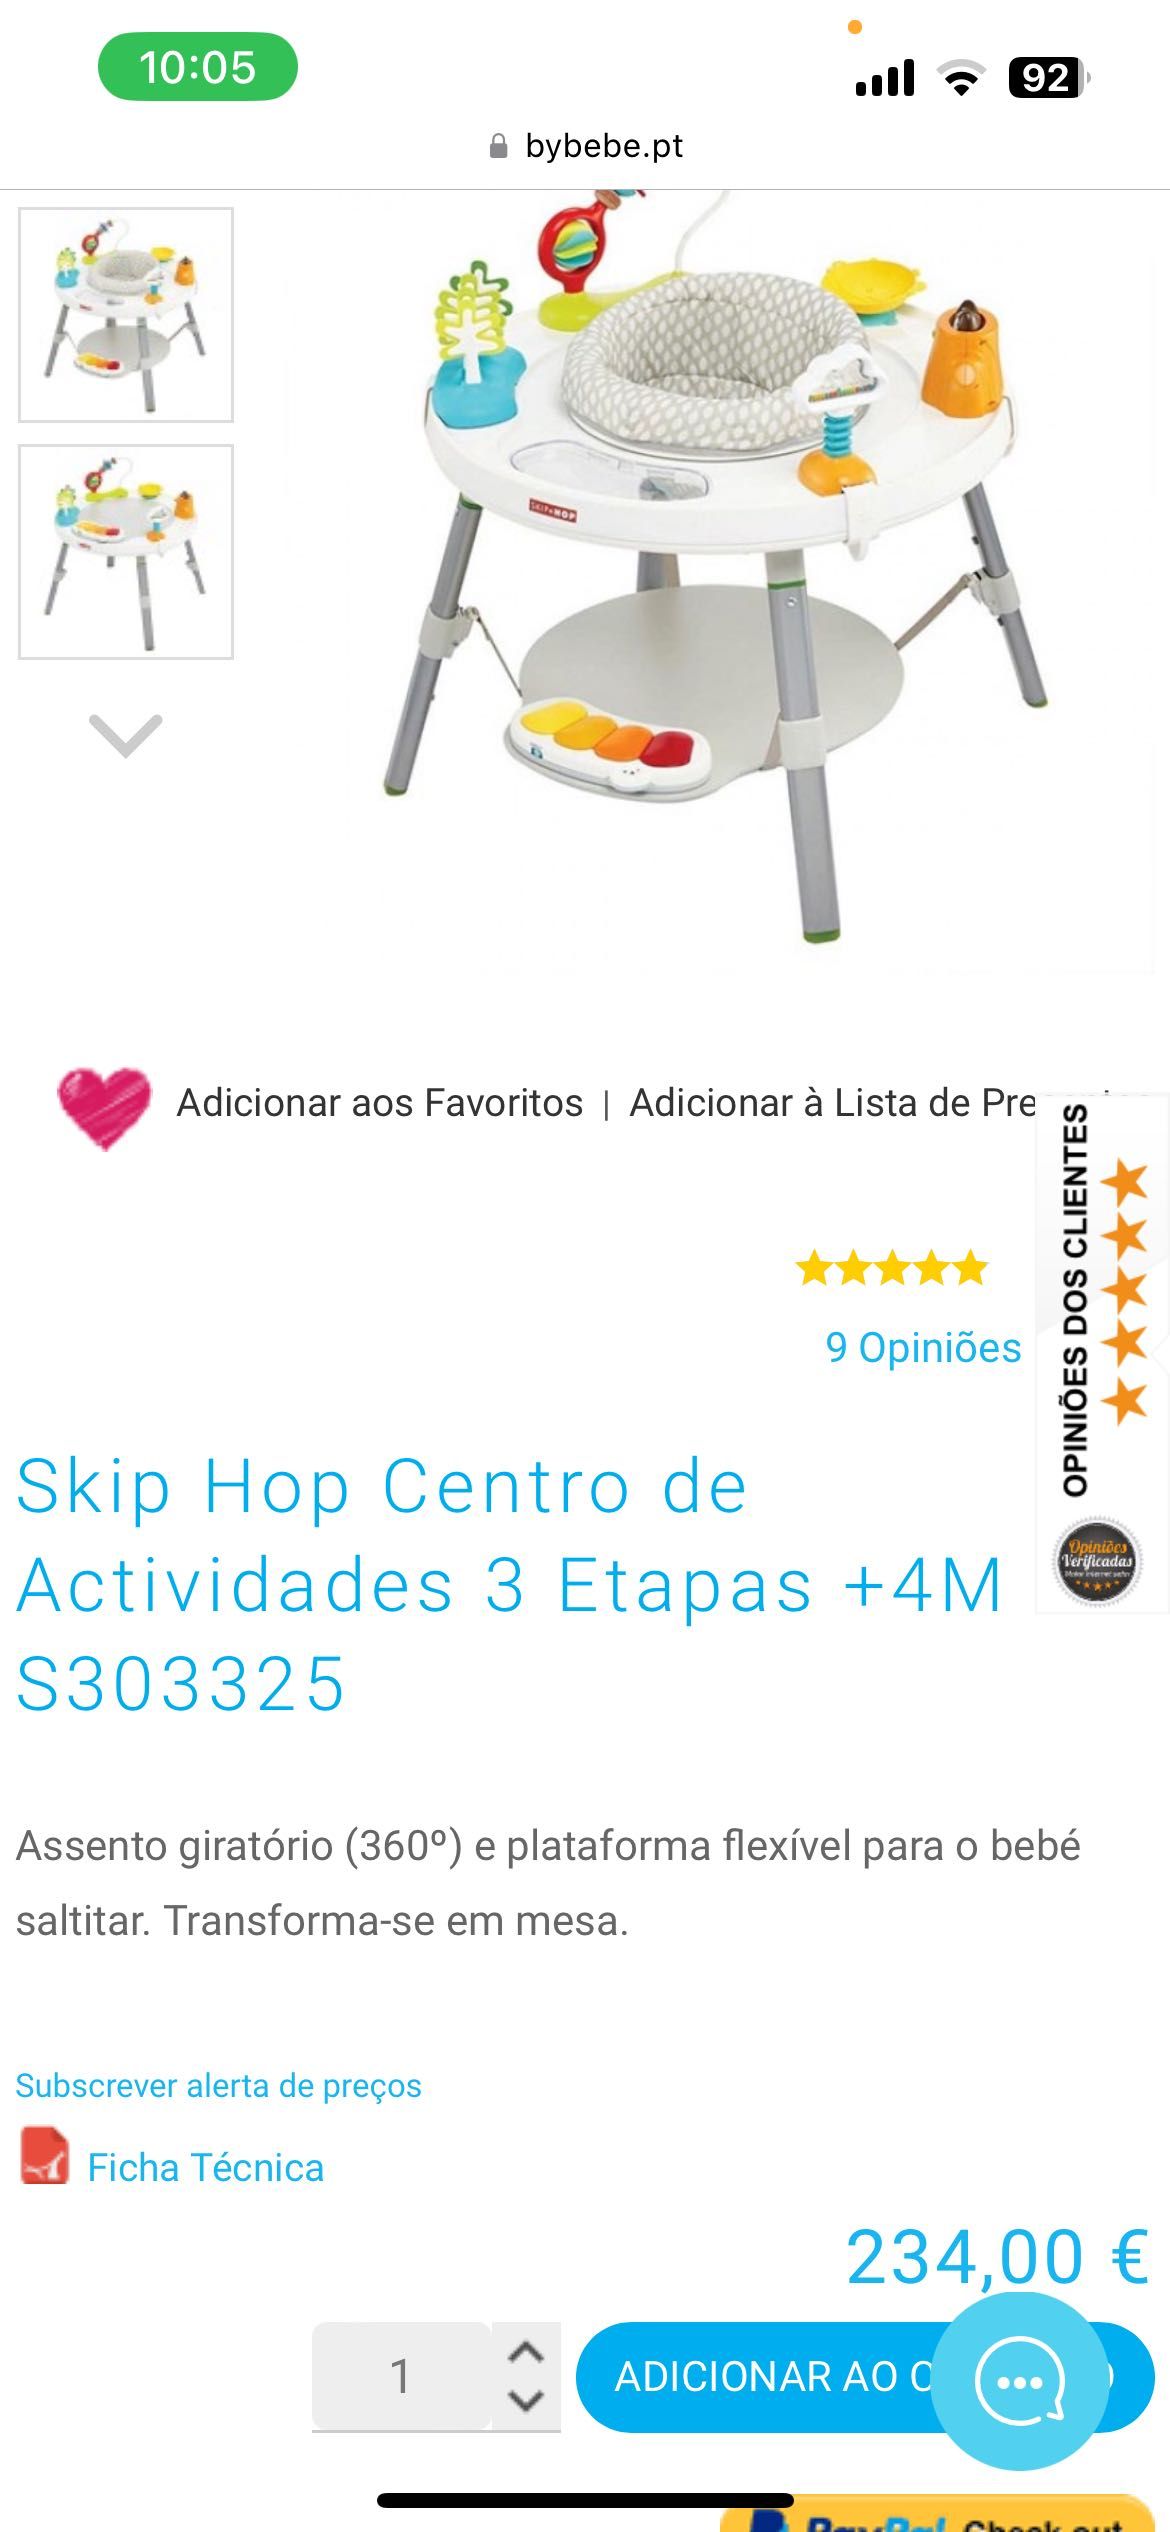 Skip Hop Centro de Actividades 3 Etapas +4M